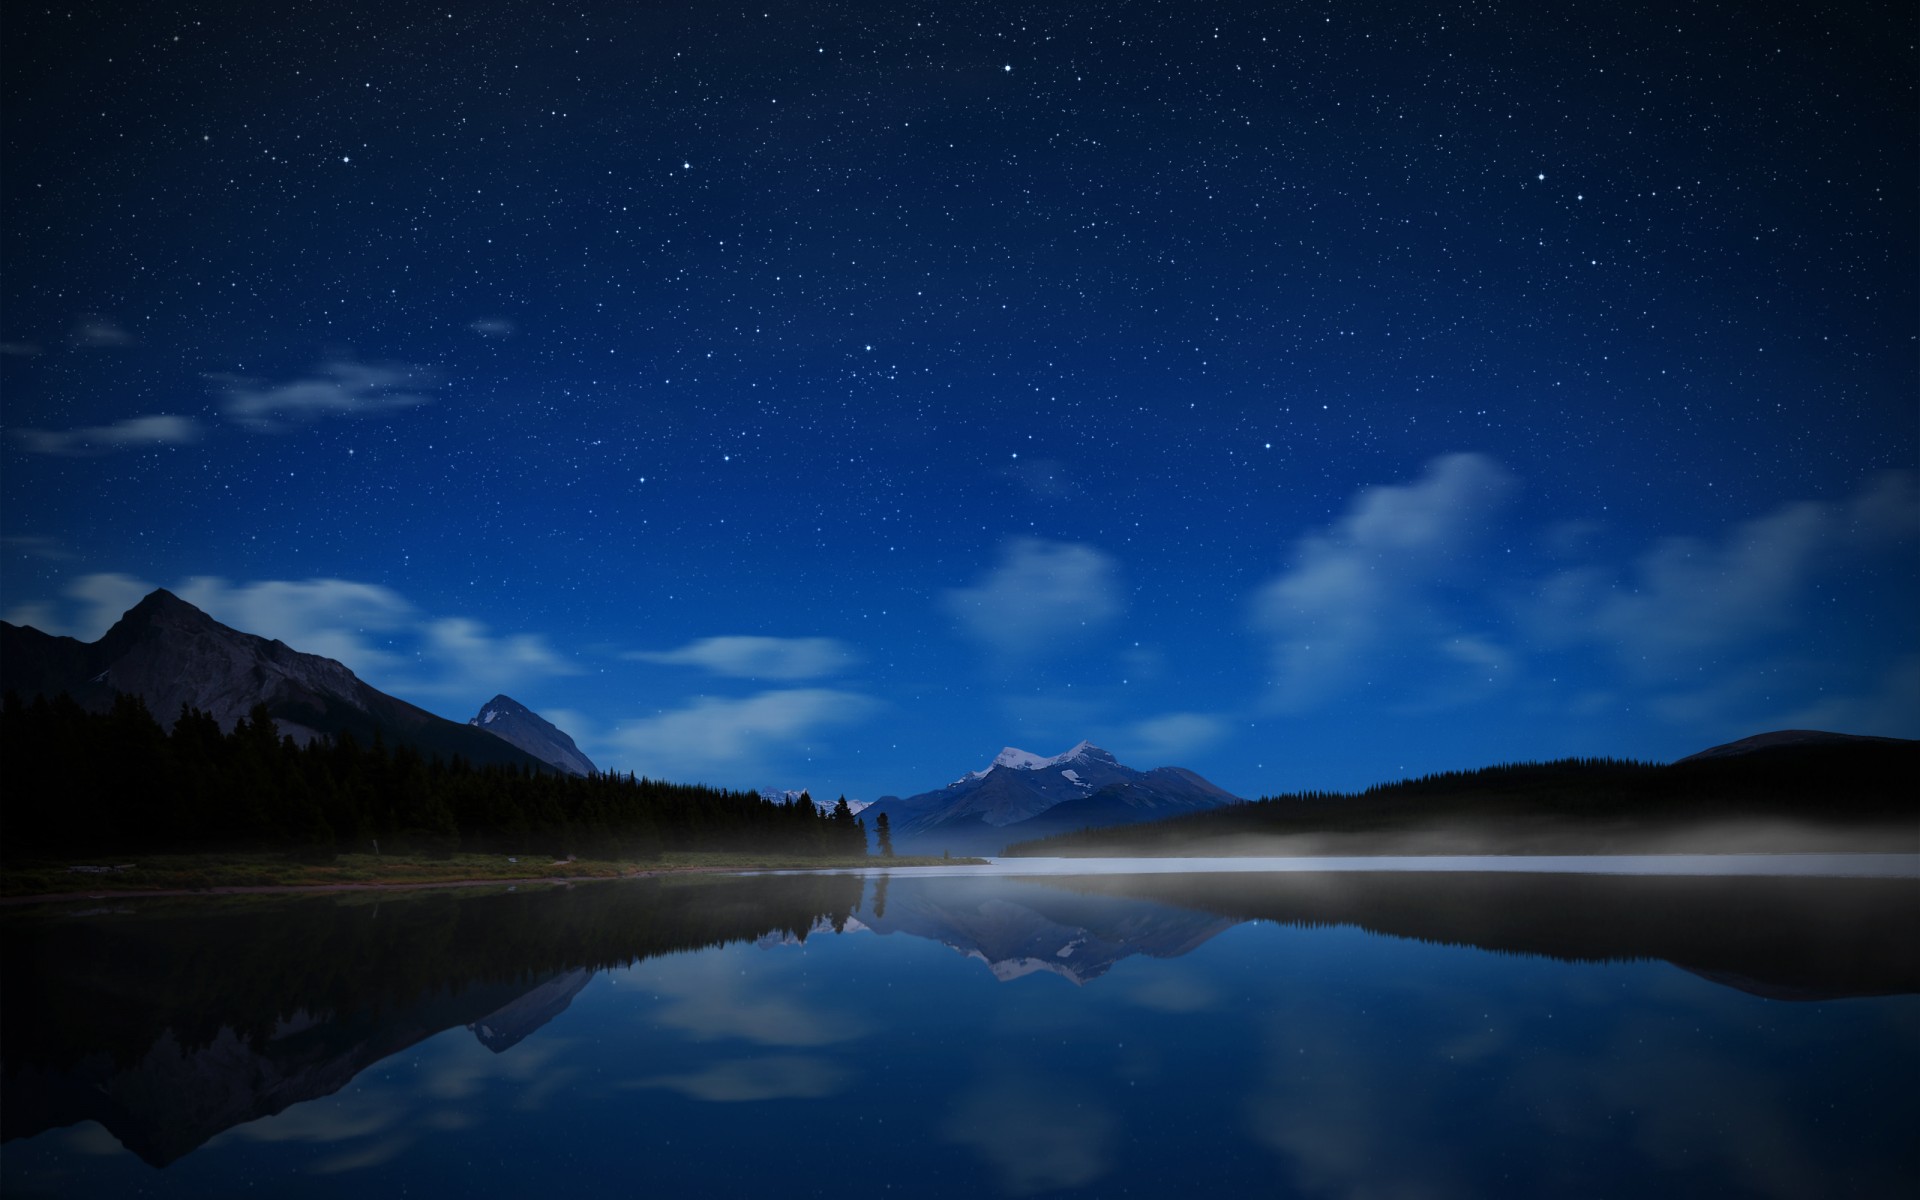 канада парк джаспер озеро горы ночь небо звезды вода